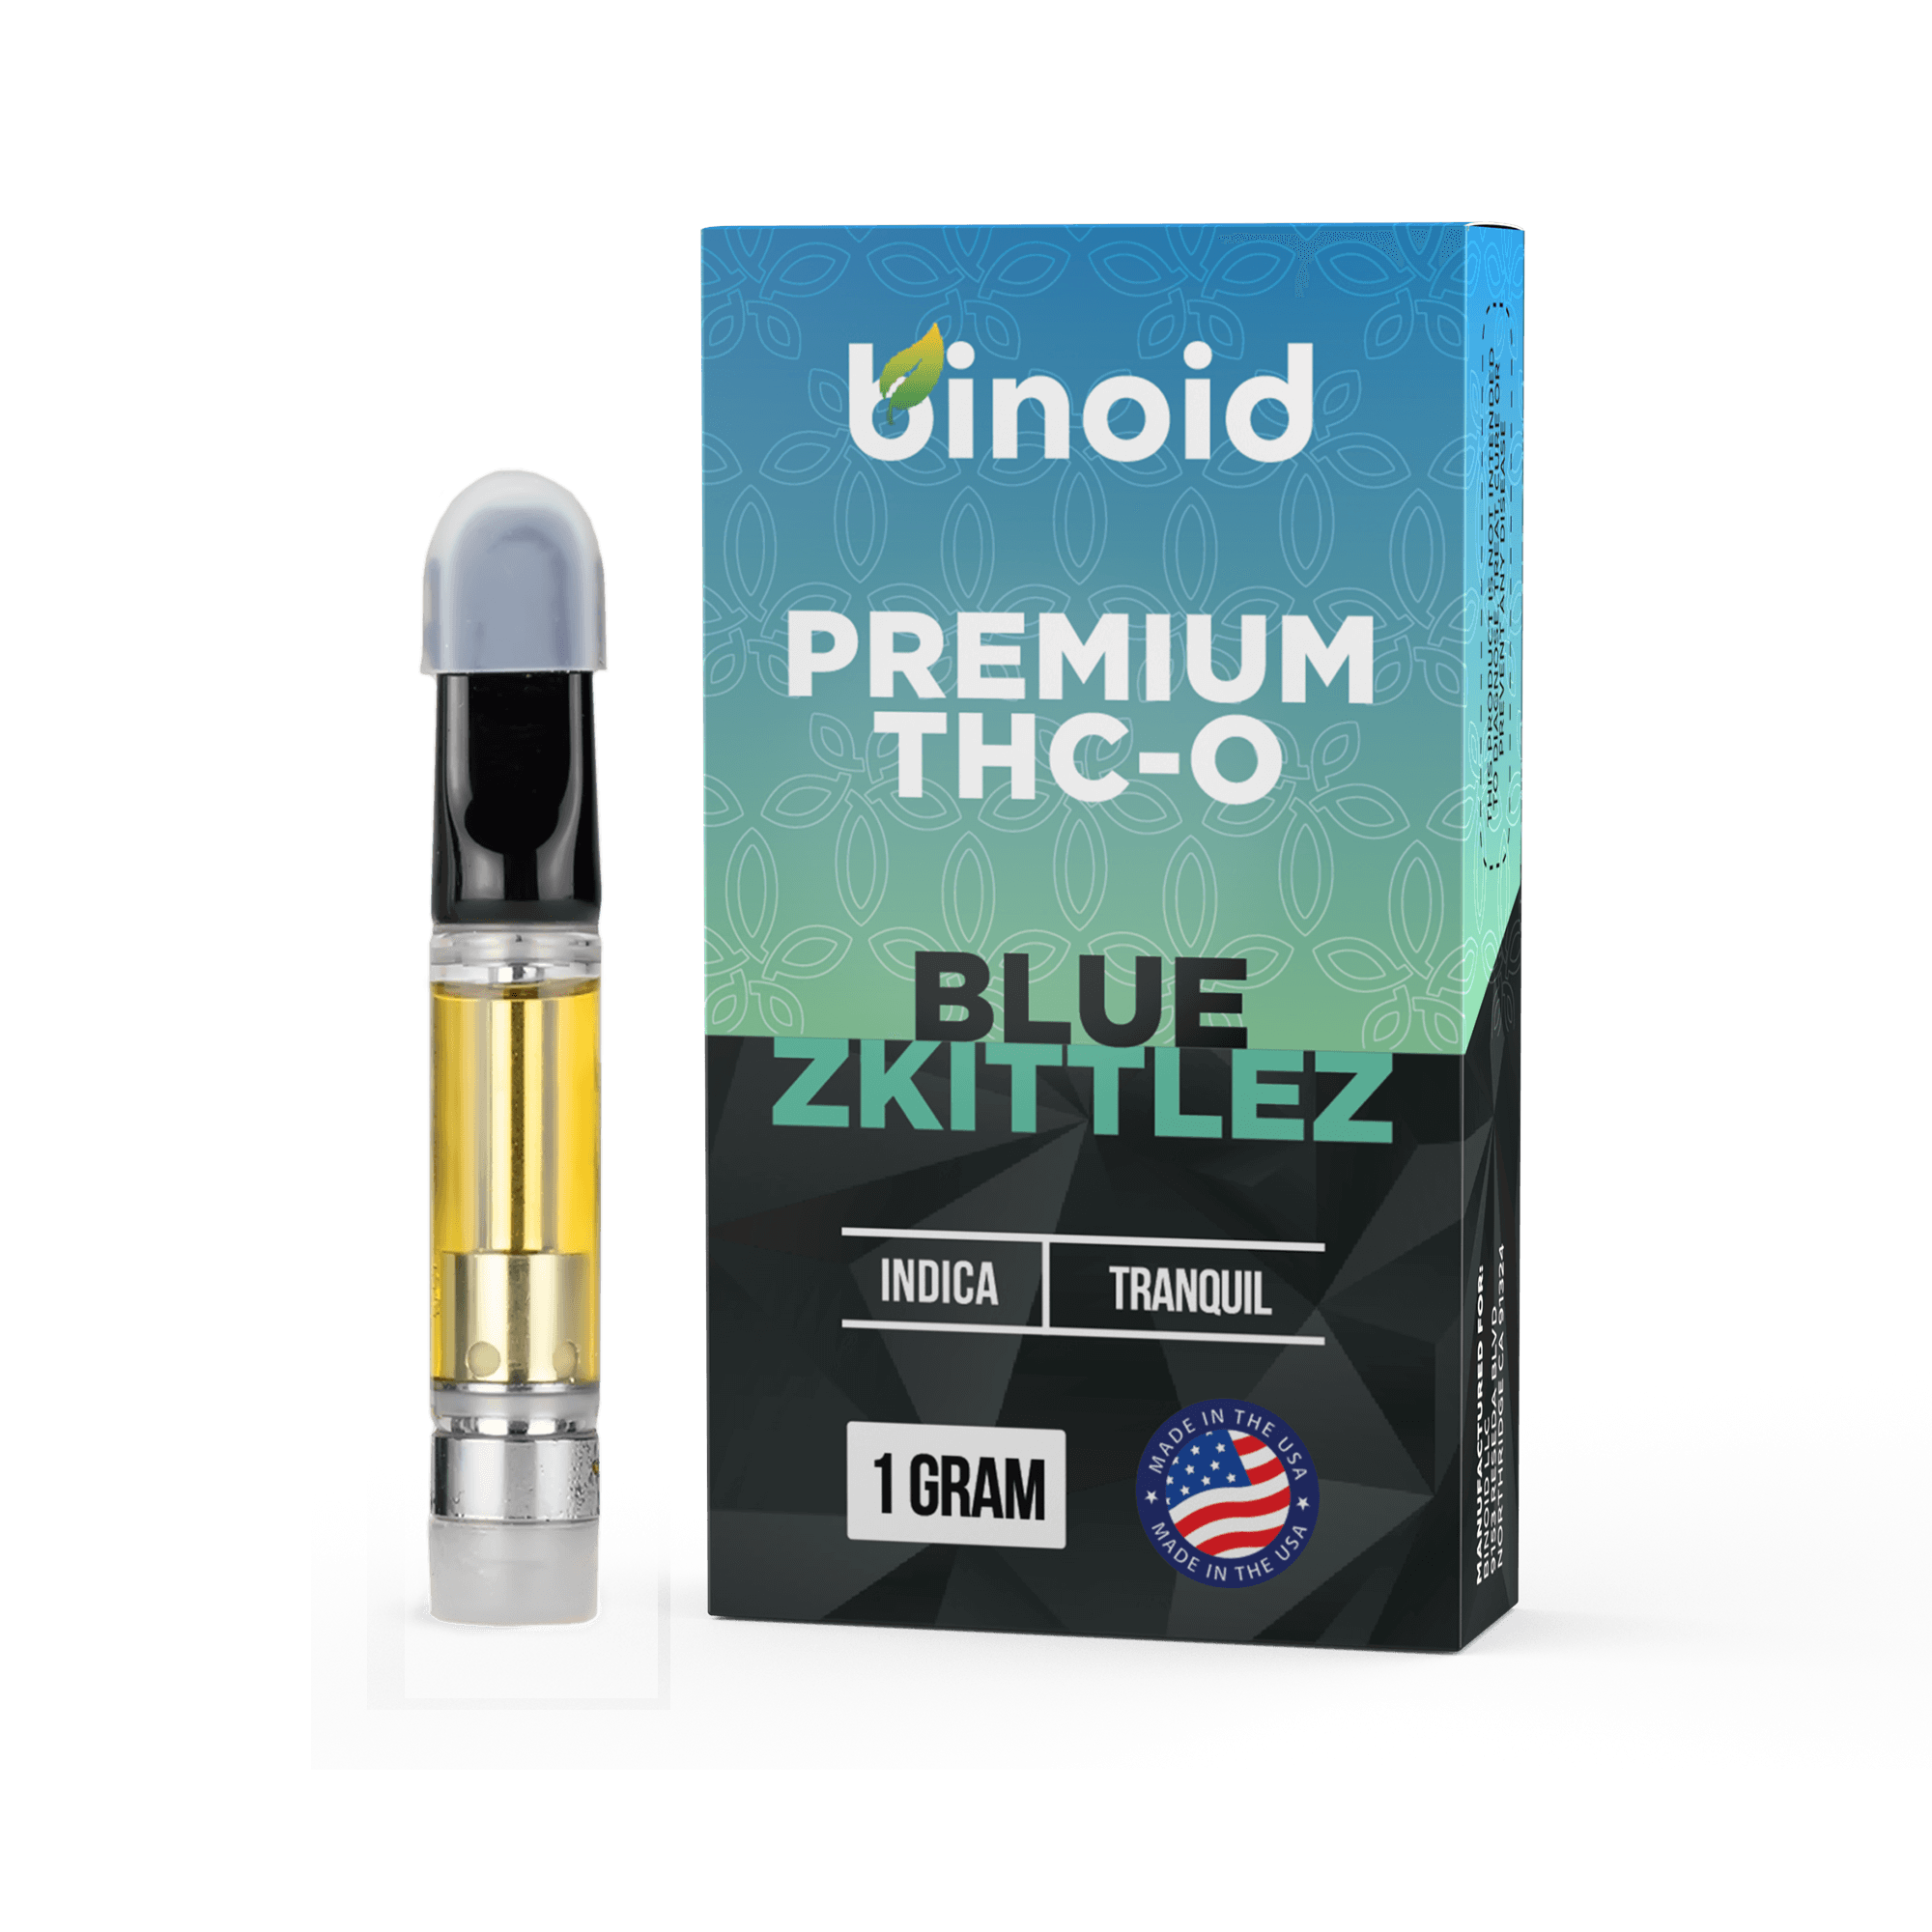 Binoid THC-O Vape Cartridge - Blue Zkittlez Best Price